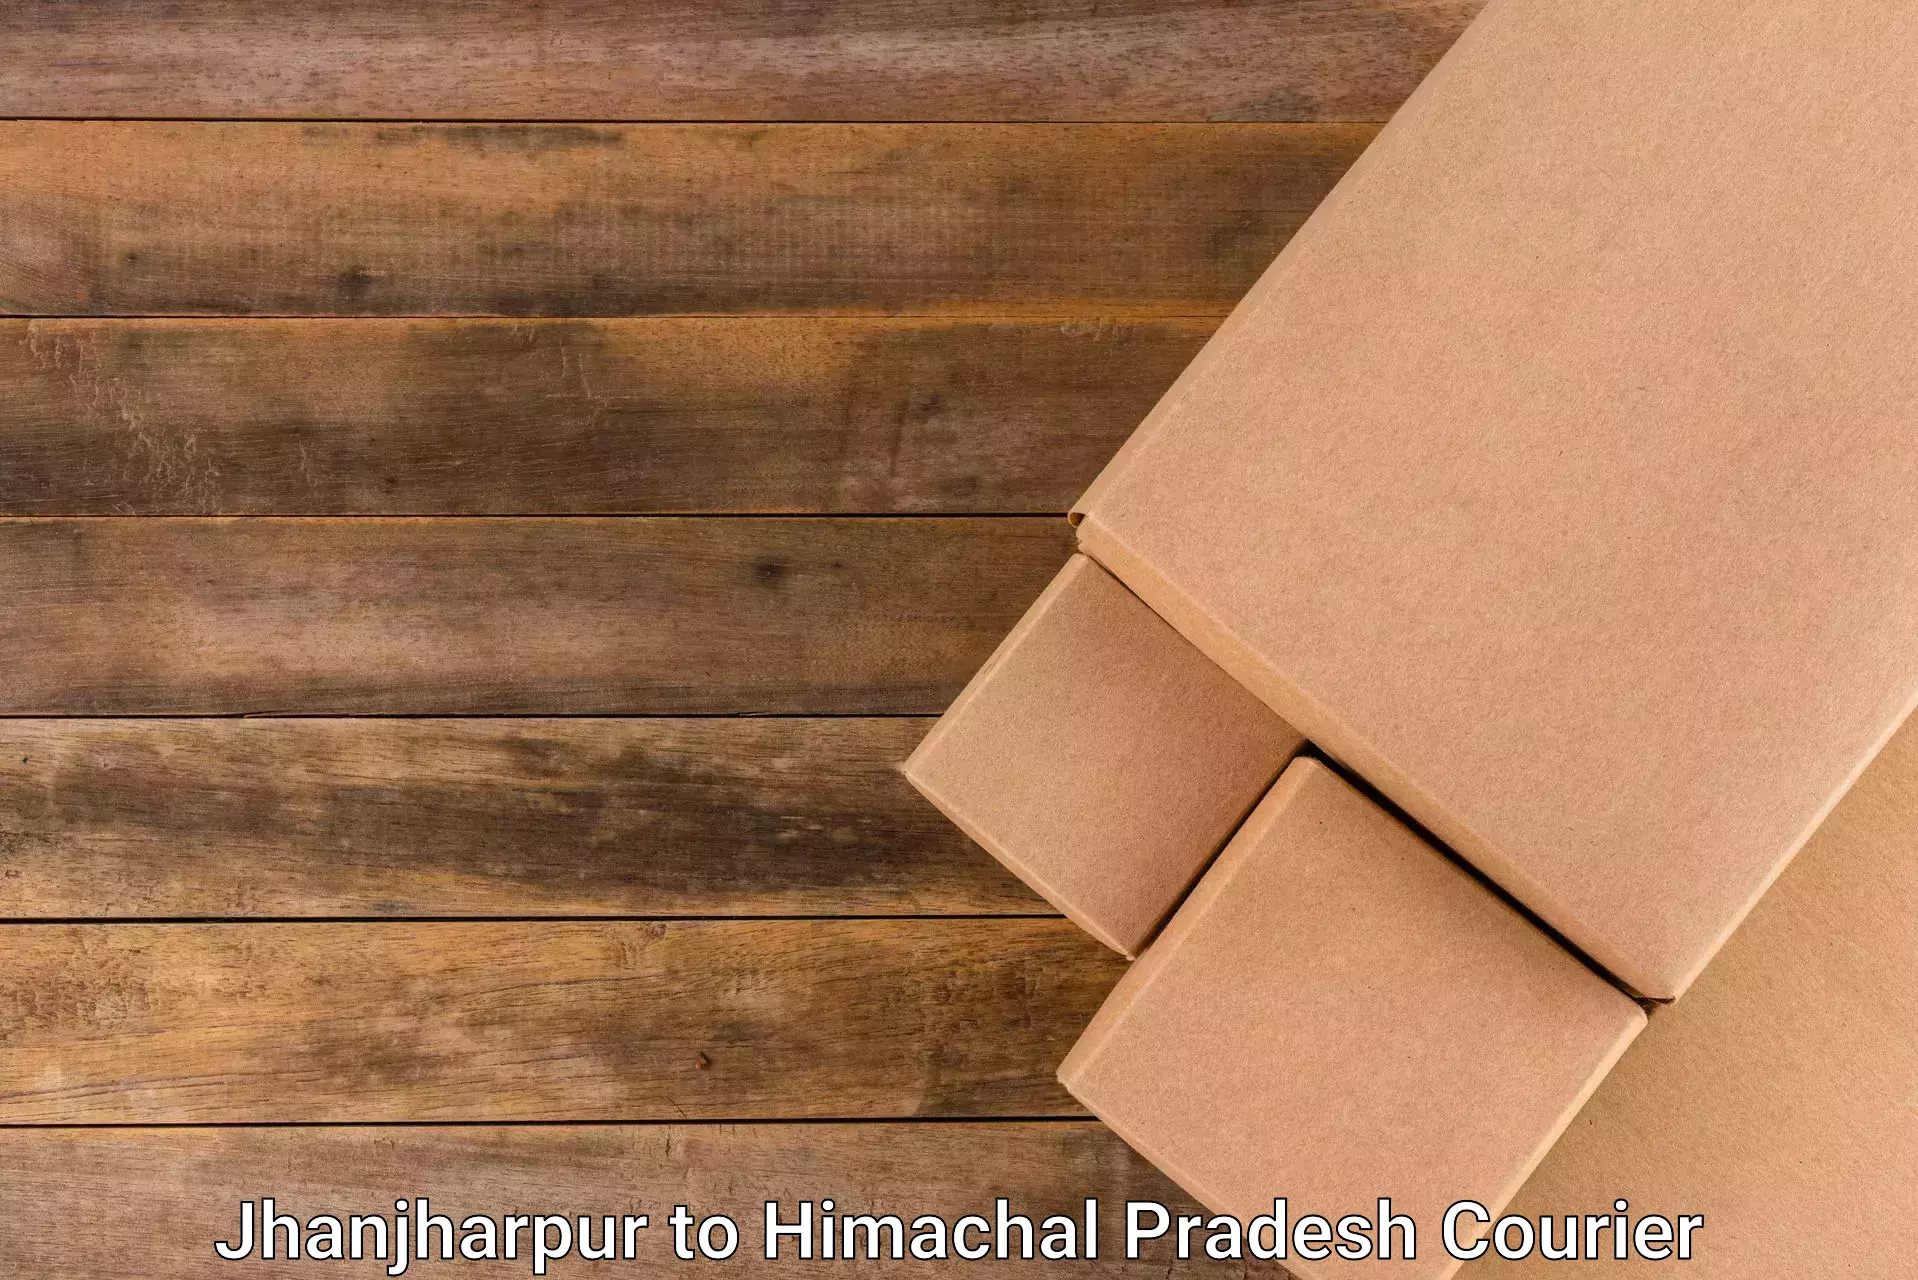 Full-service courier options Jhanjharpur to Himachal Pradesh